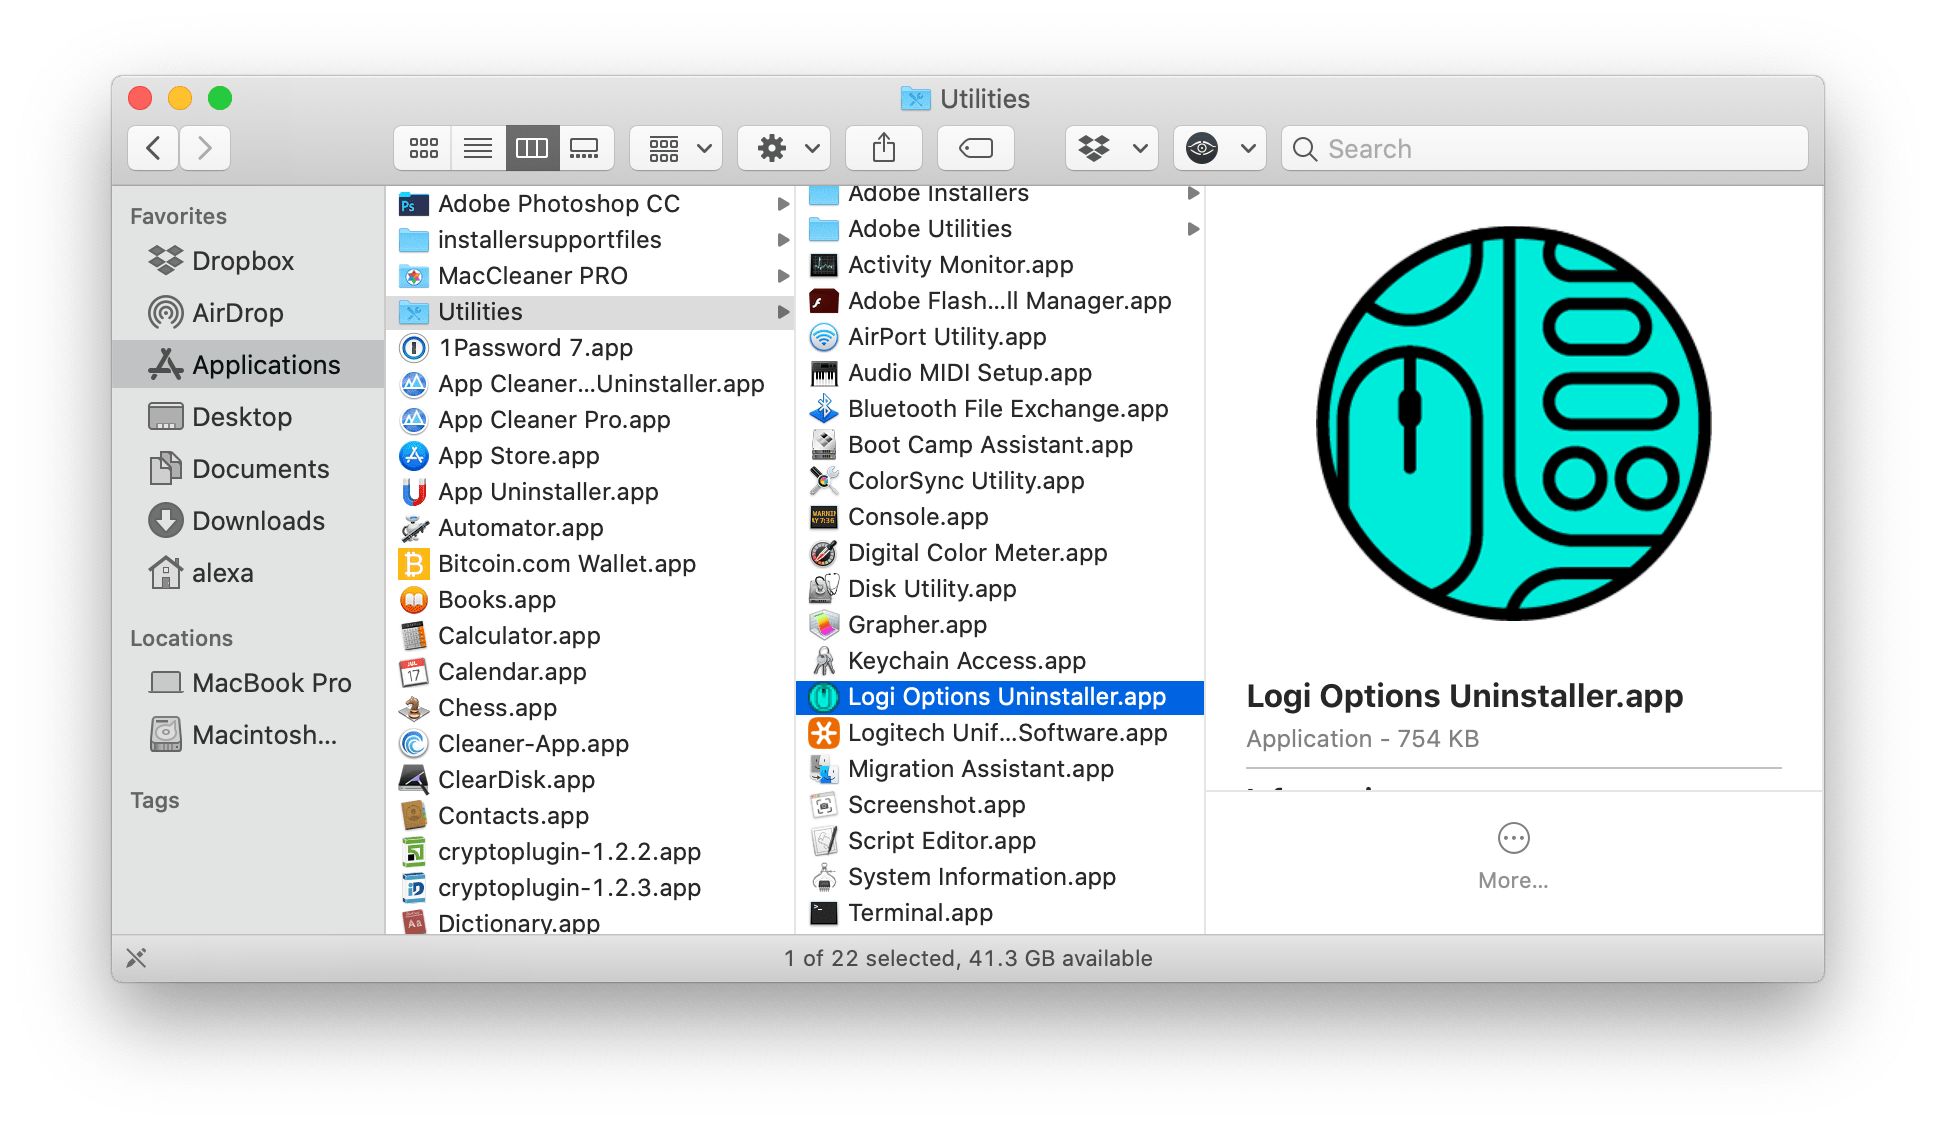 Logitech Options Uninstaller application in Finder window